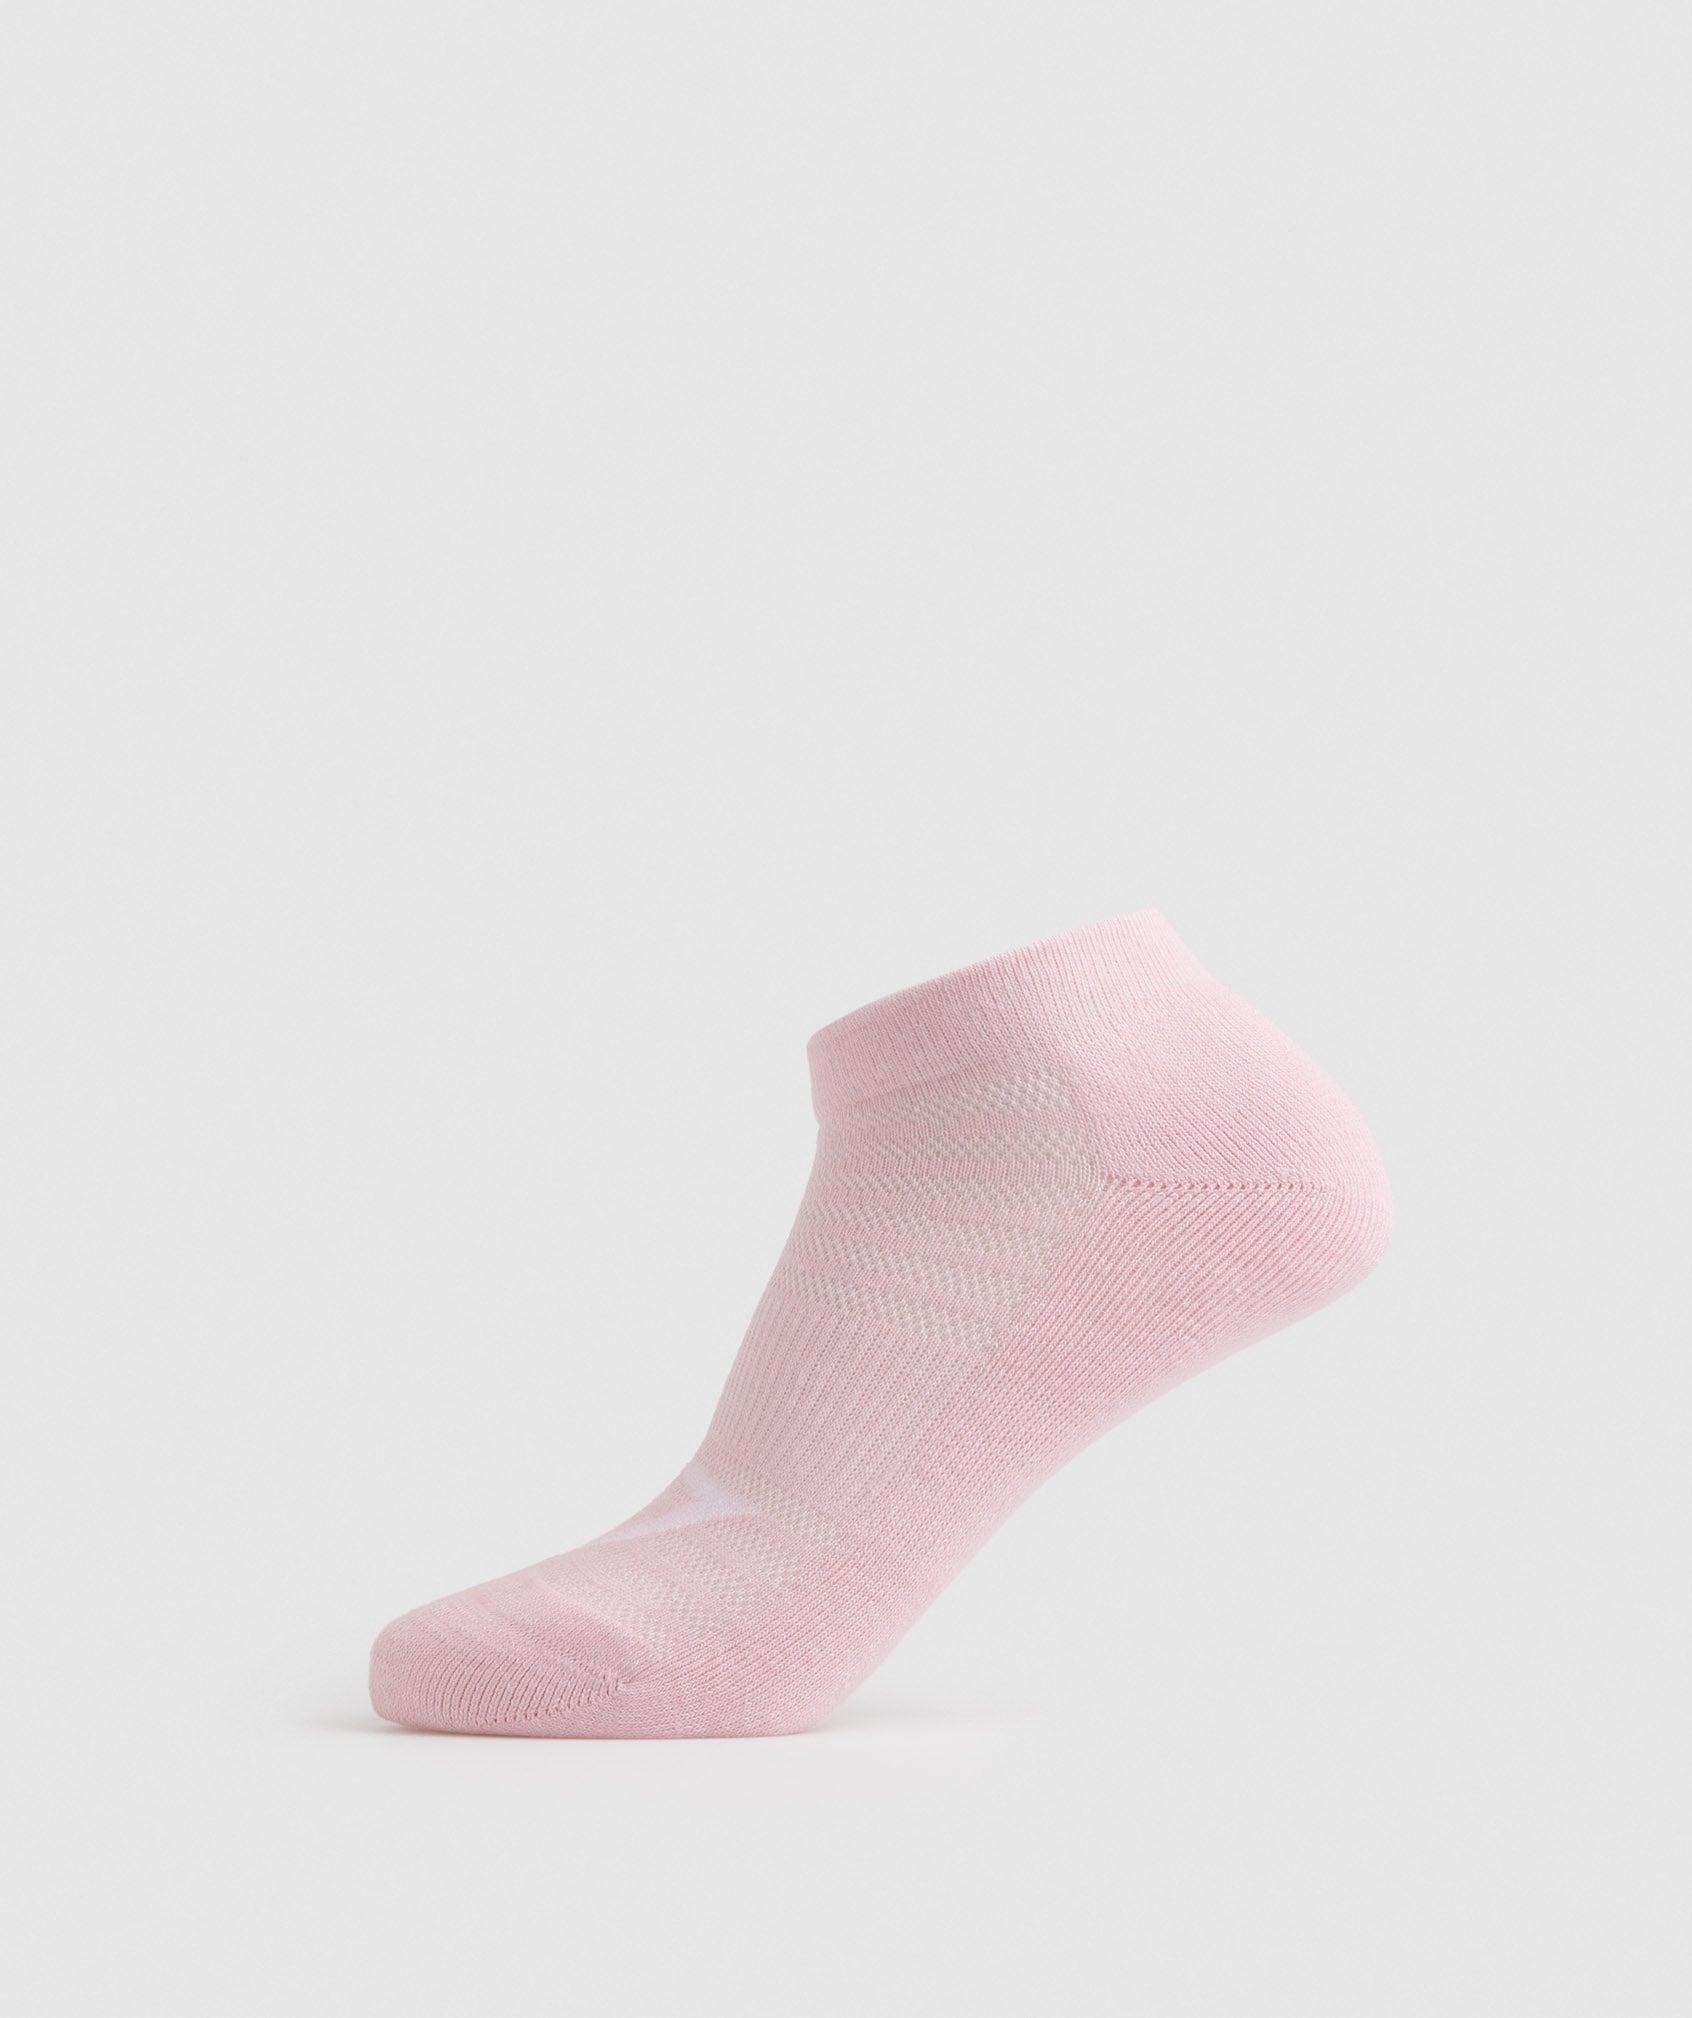 Trainer Socks 3pk in Baked Maroon/Sweet Pink/White - view 5